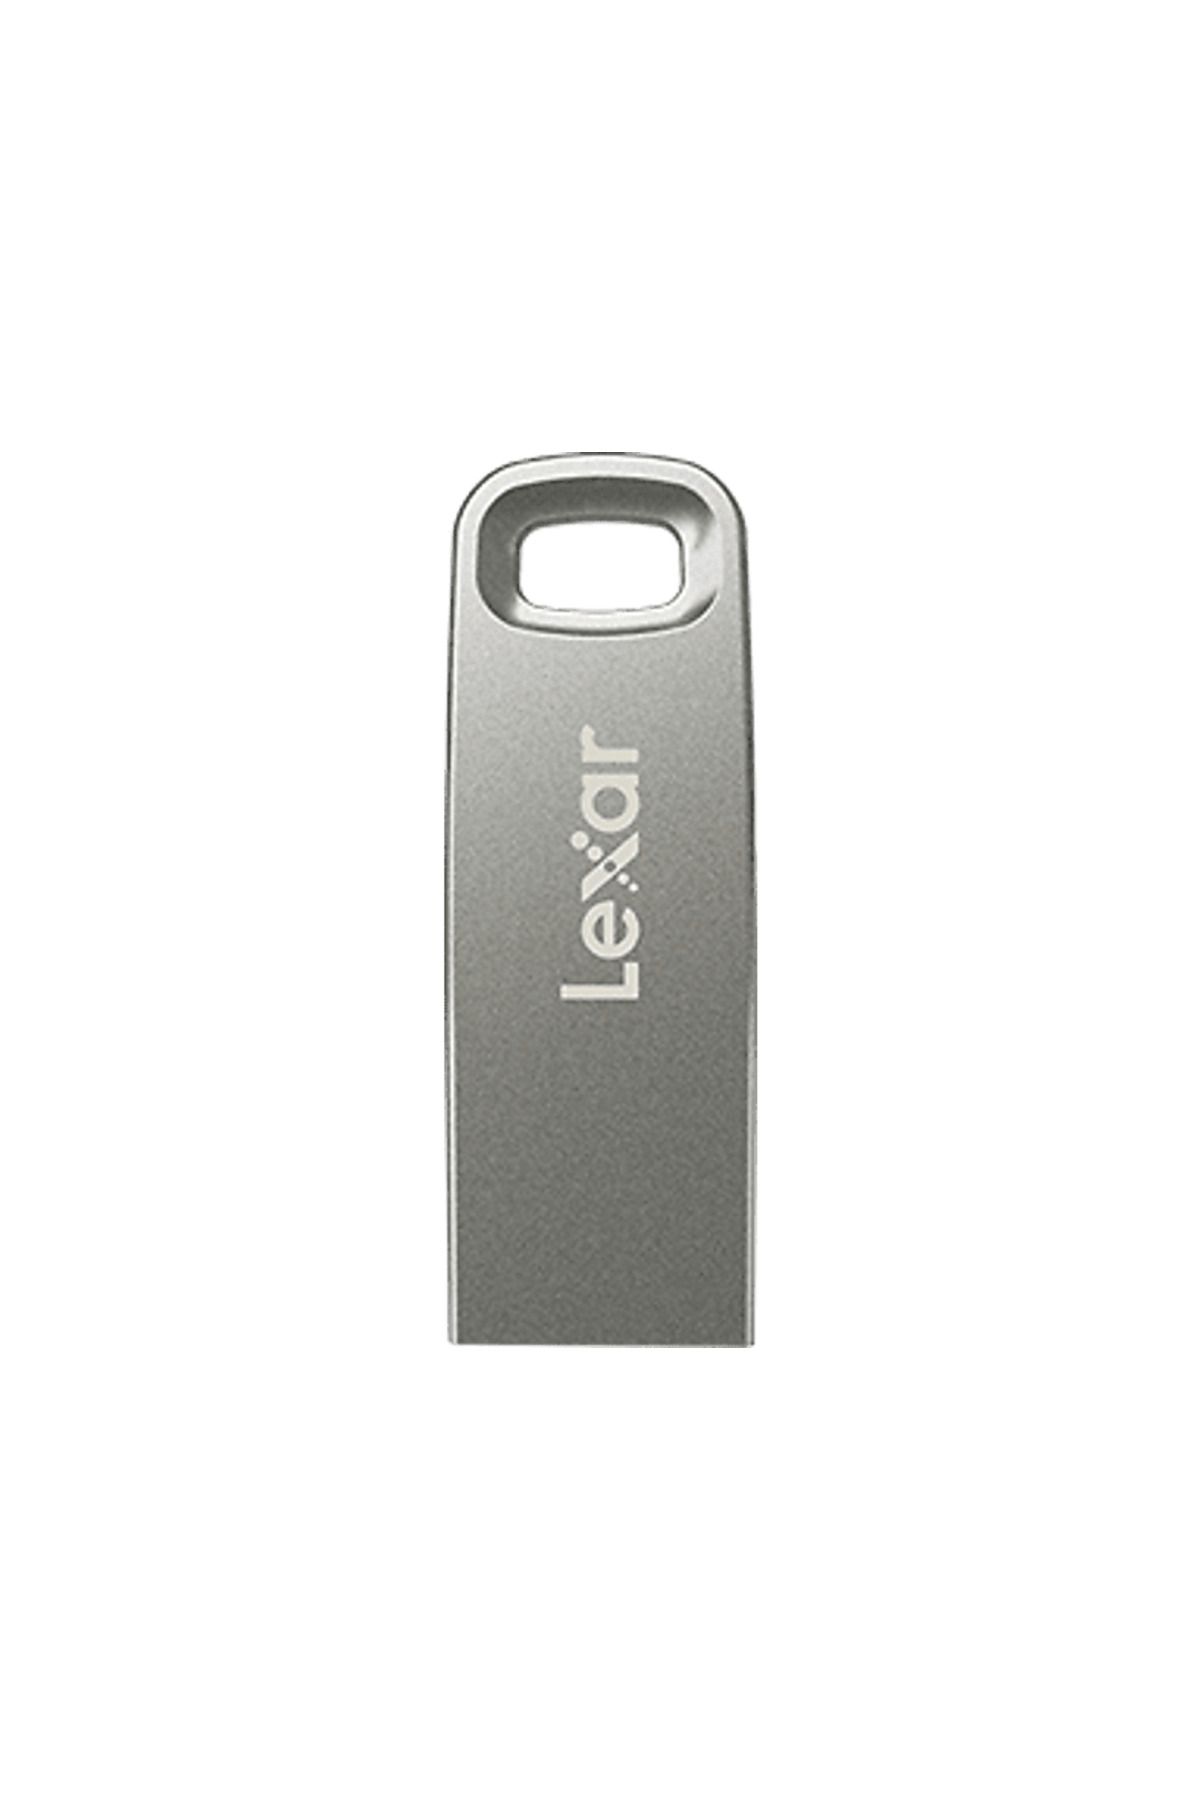 Lexar JumpDrive USB 3.1 M45 64GB Housing, up to 250MB/s USB Bellek Gümüş